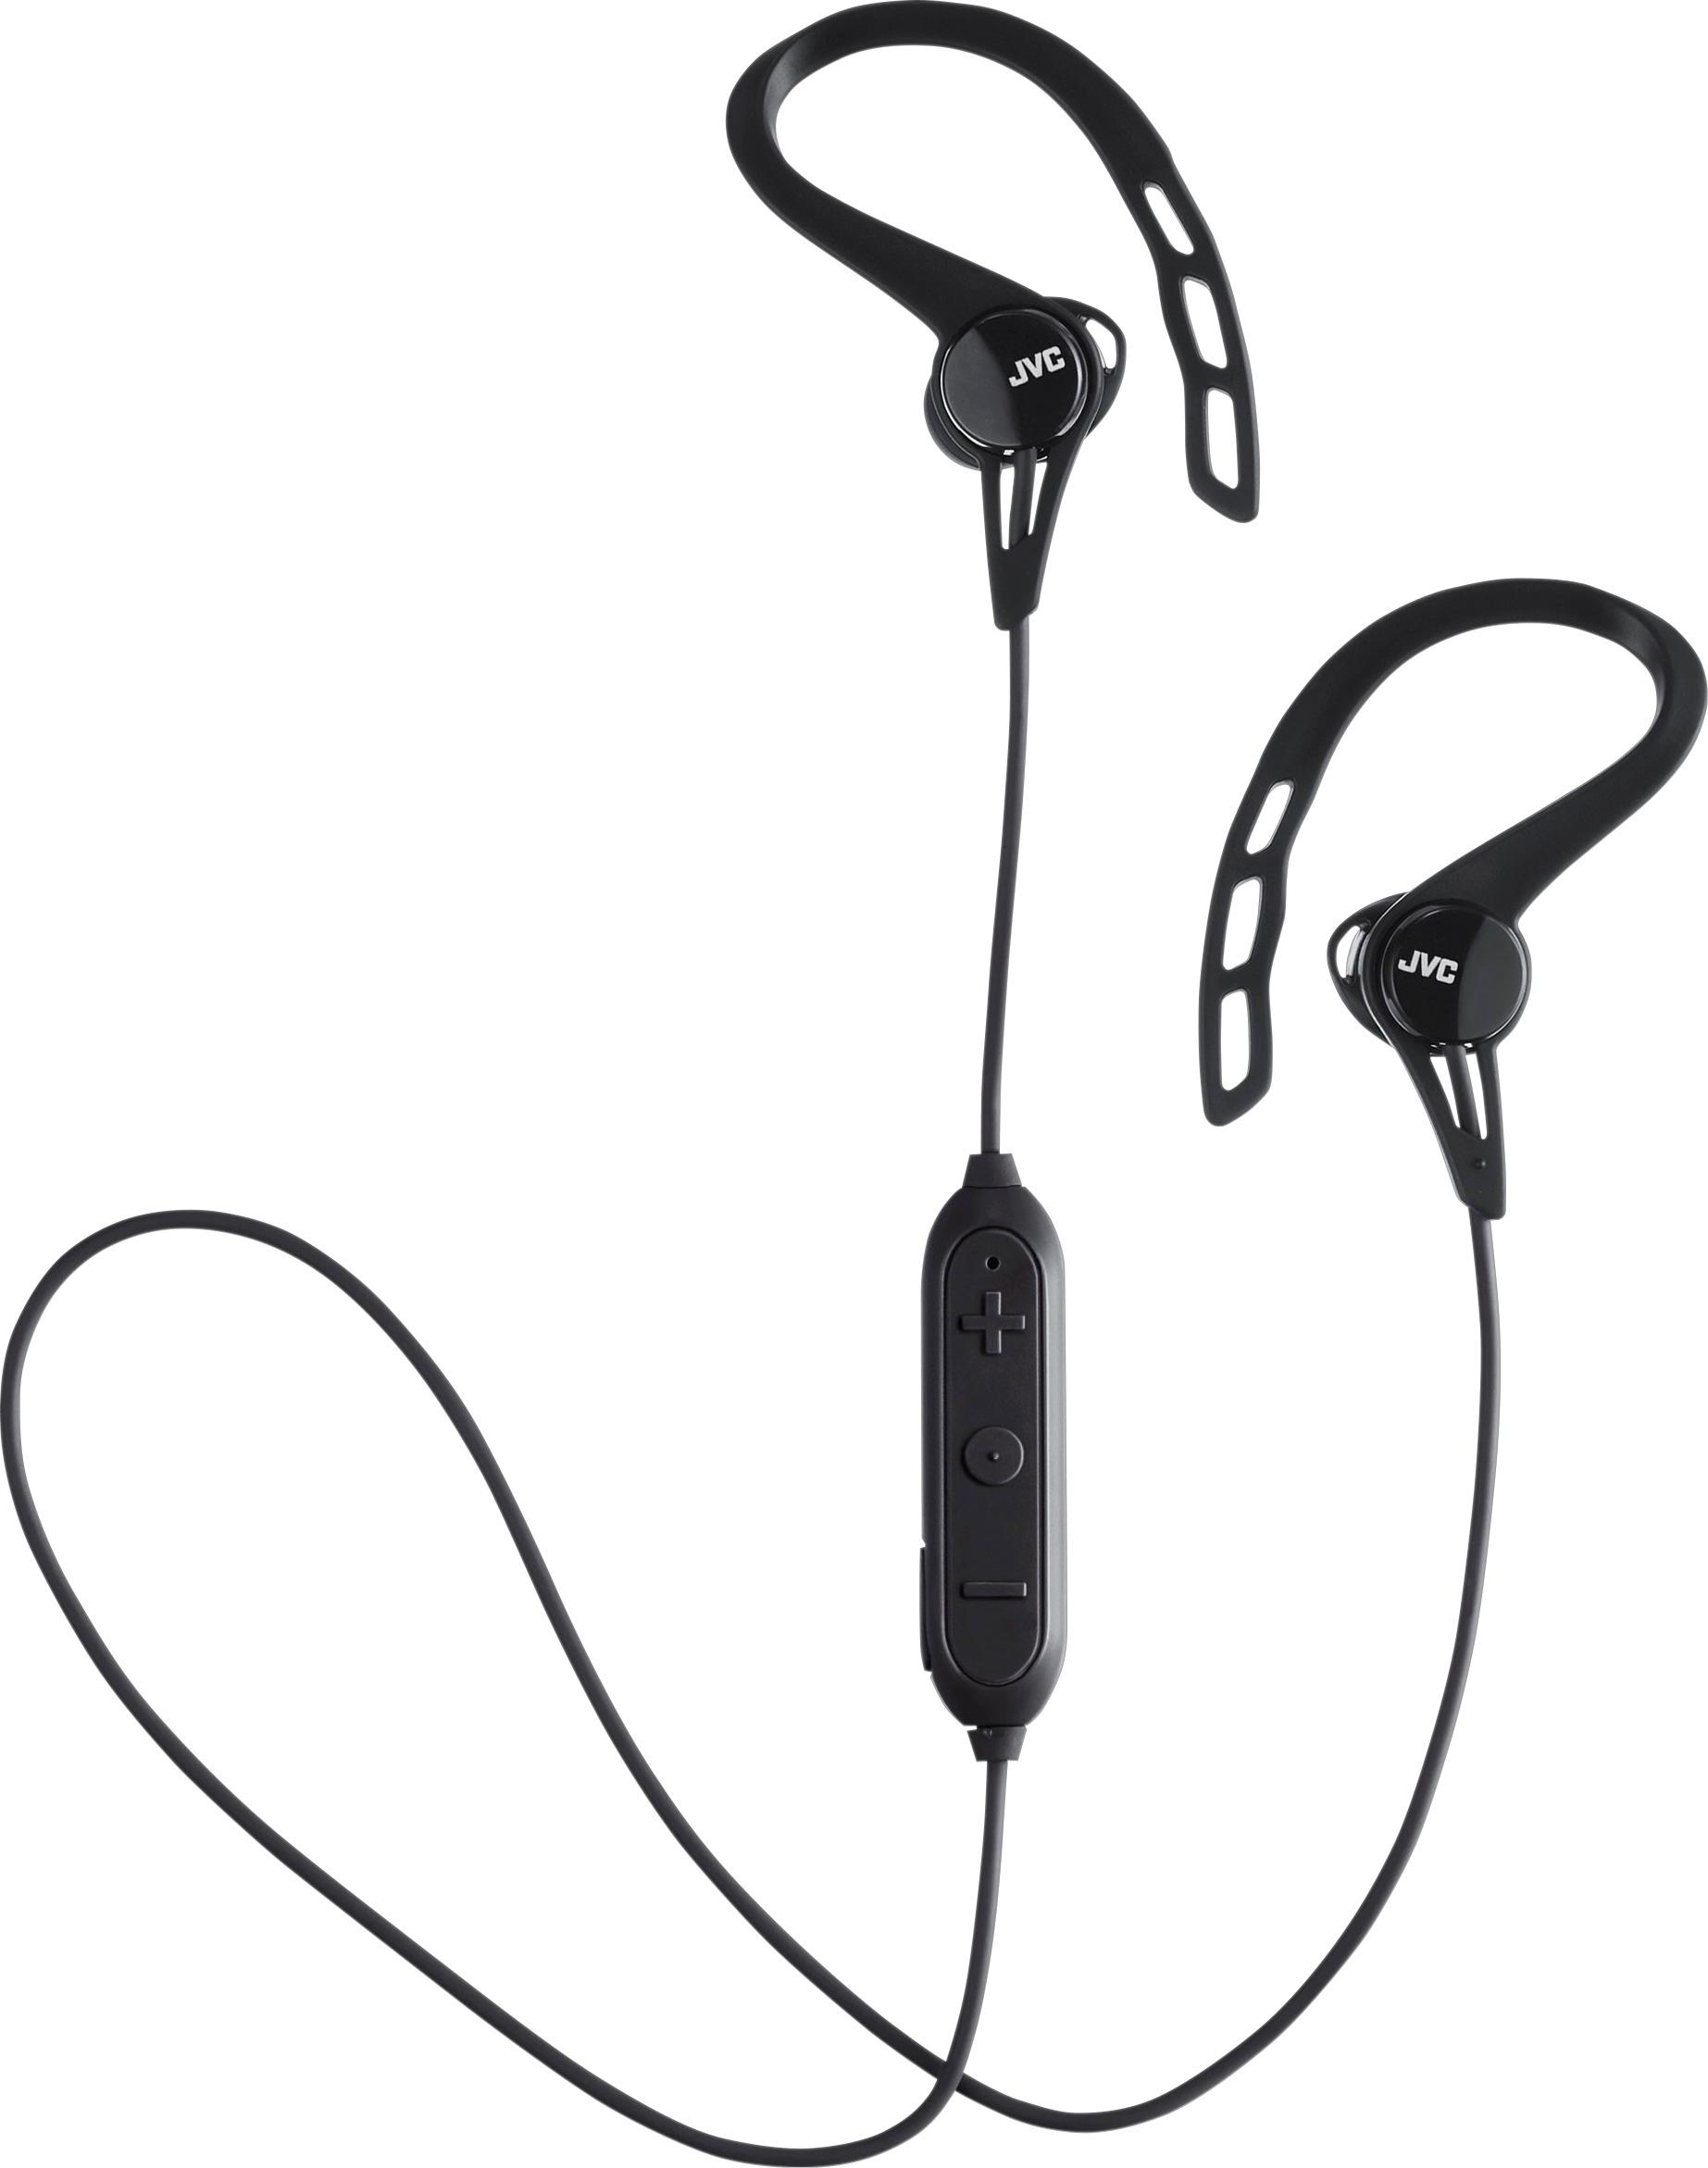 Angle View: JVC - HA EC20BT Wireless In-Ear Headphones (iOS) - Black